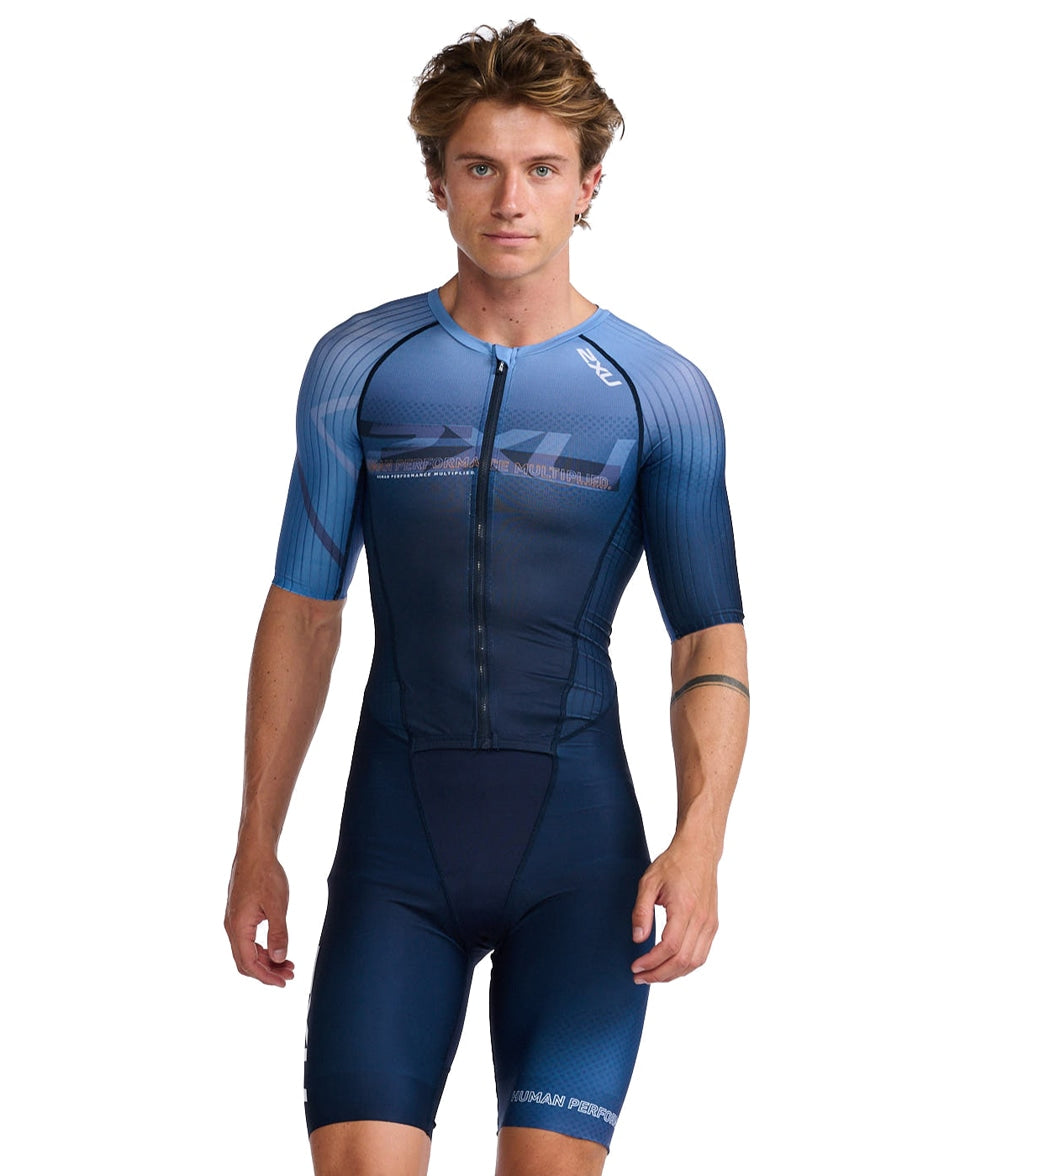 padle fingeraftryk lærred 2XU Men's Aero Sleeved Trisuit at SwimOutlet.com